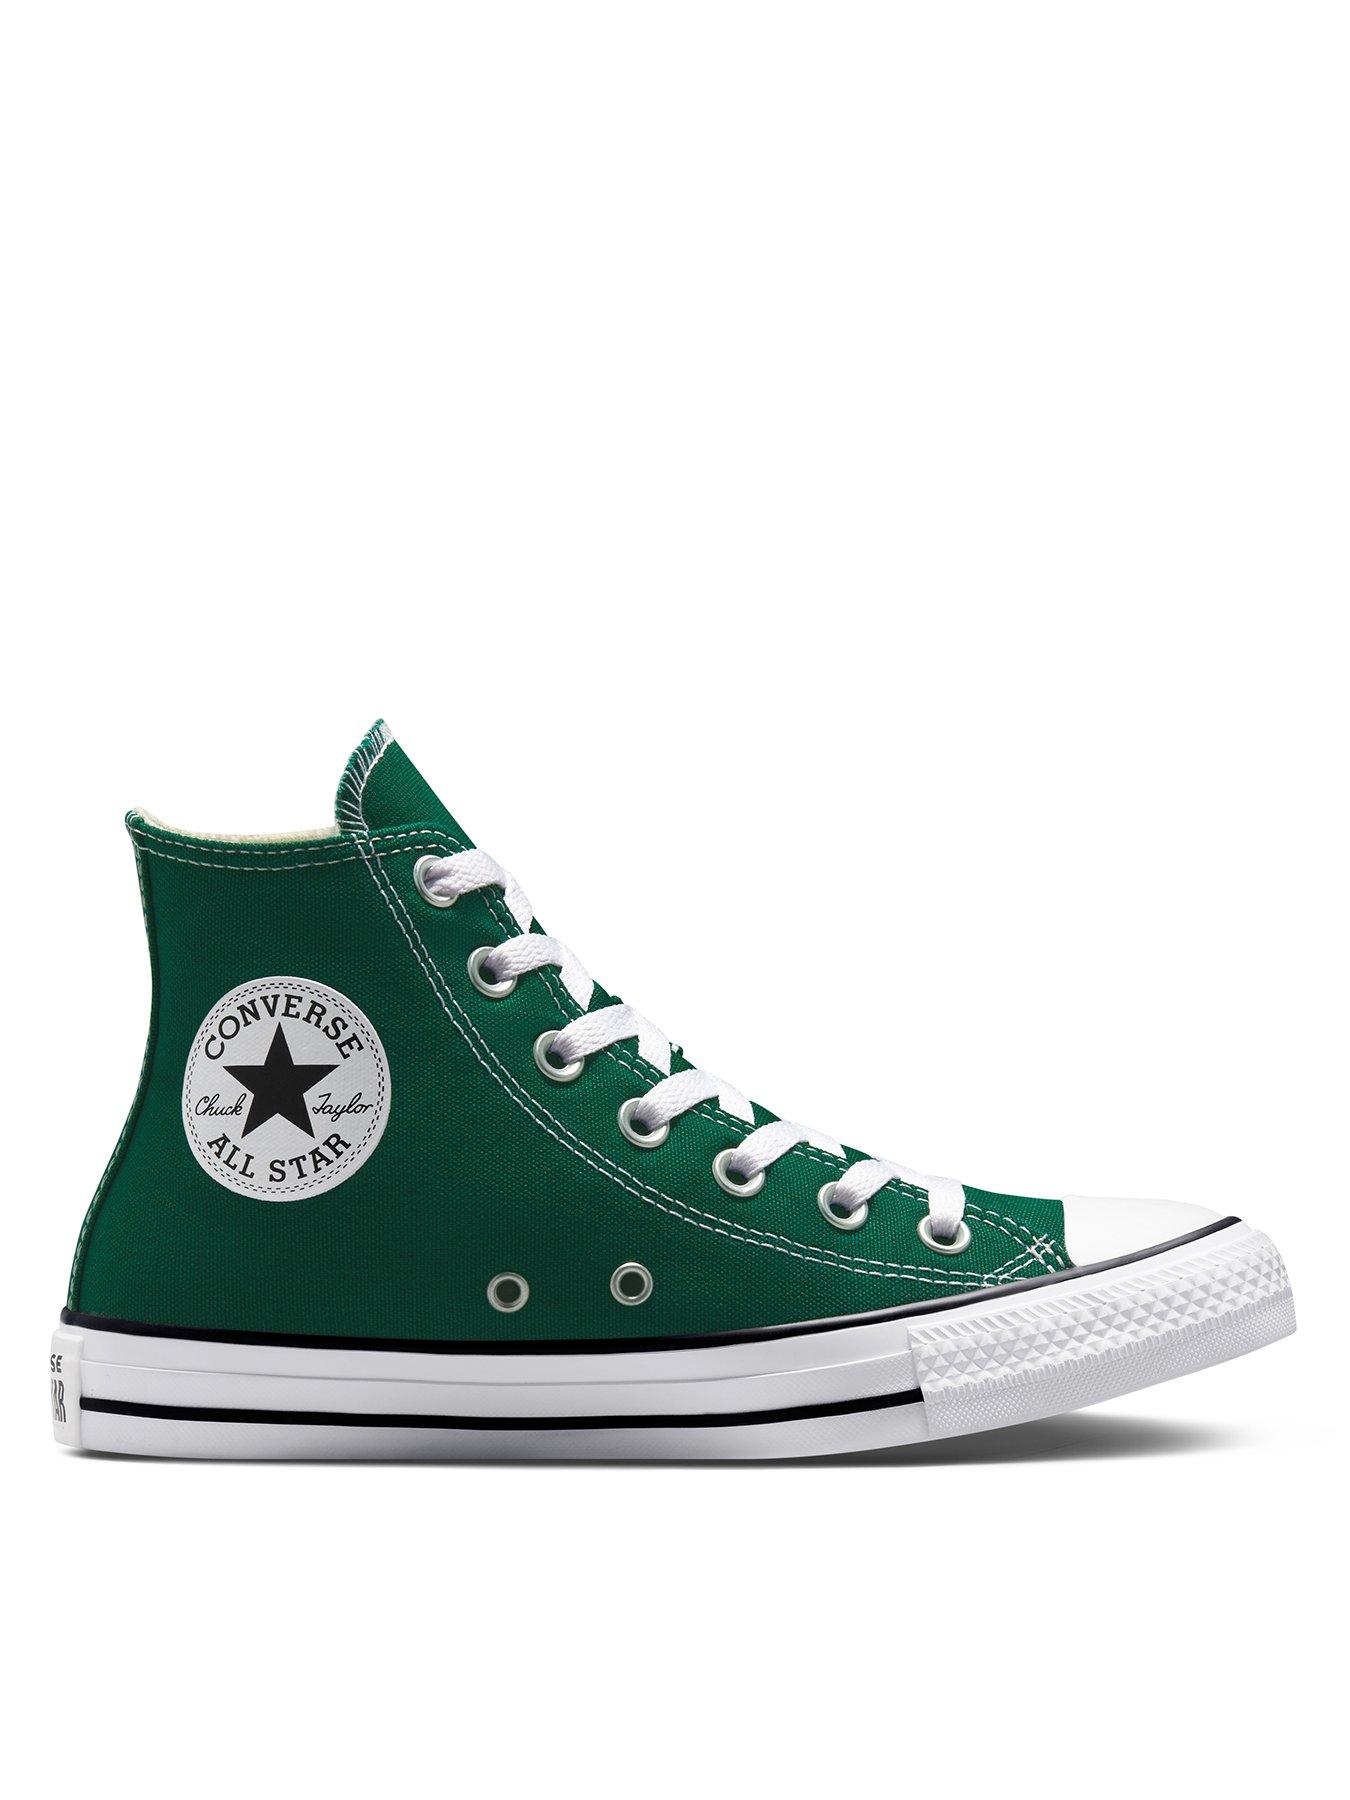 Converse Chuck Taylor All Star Canvas Hi - Dark Green/White | very.co.uk